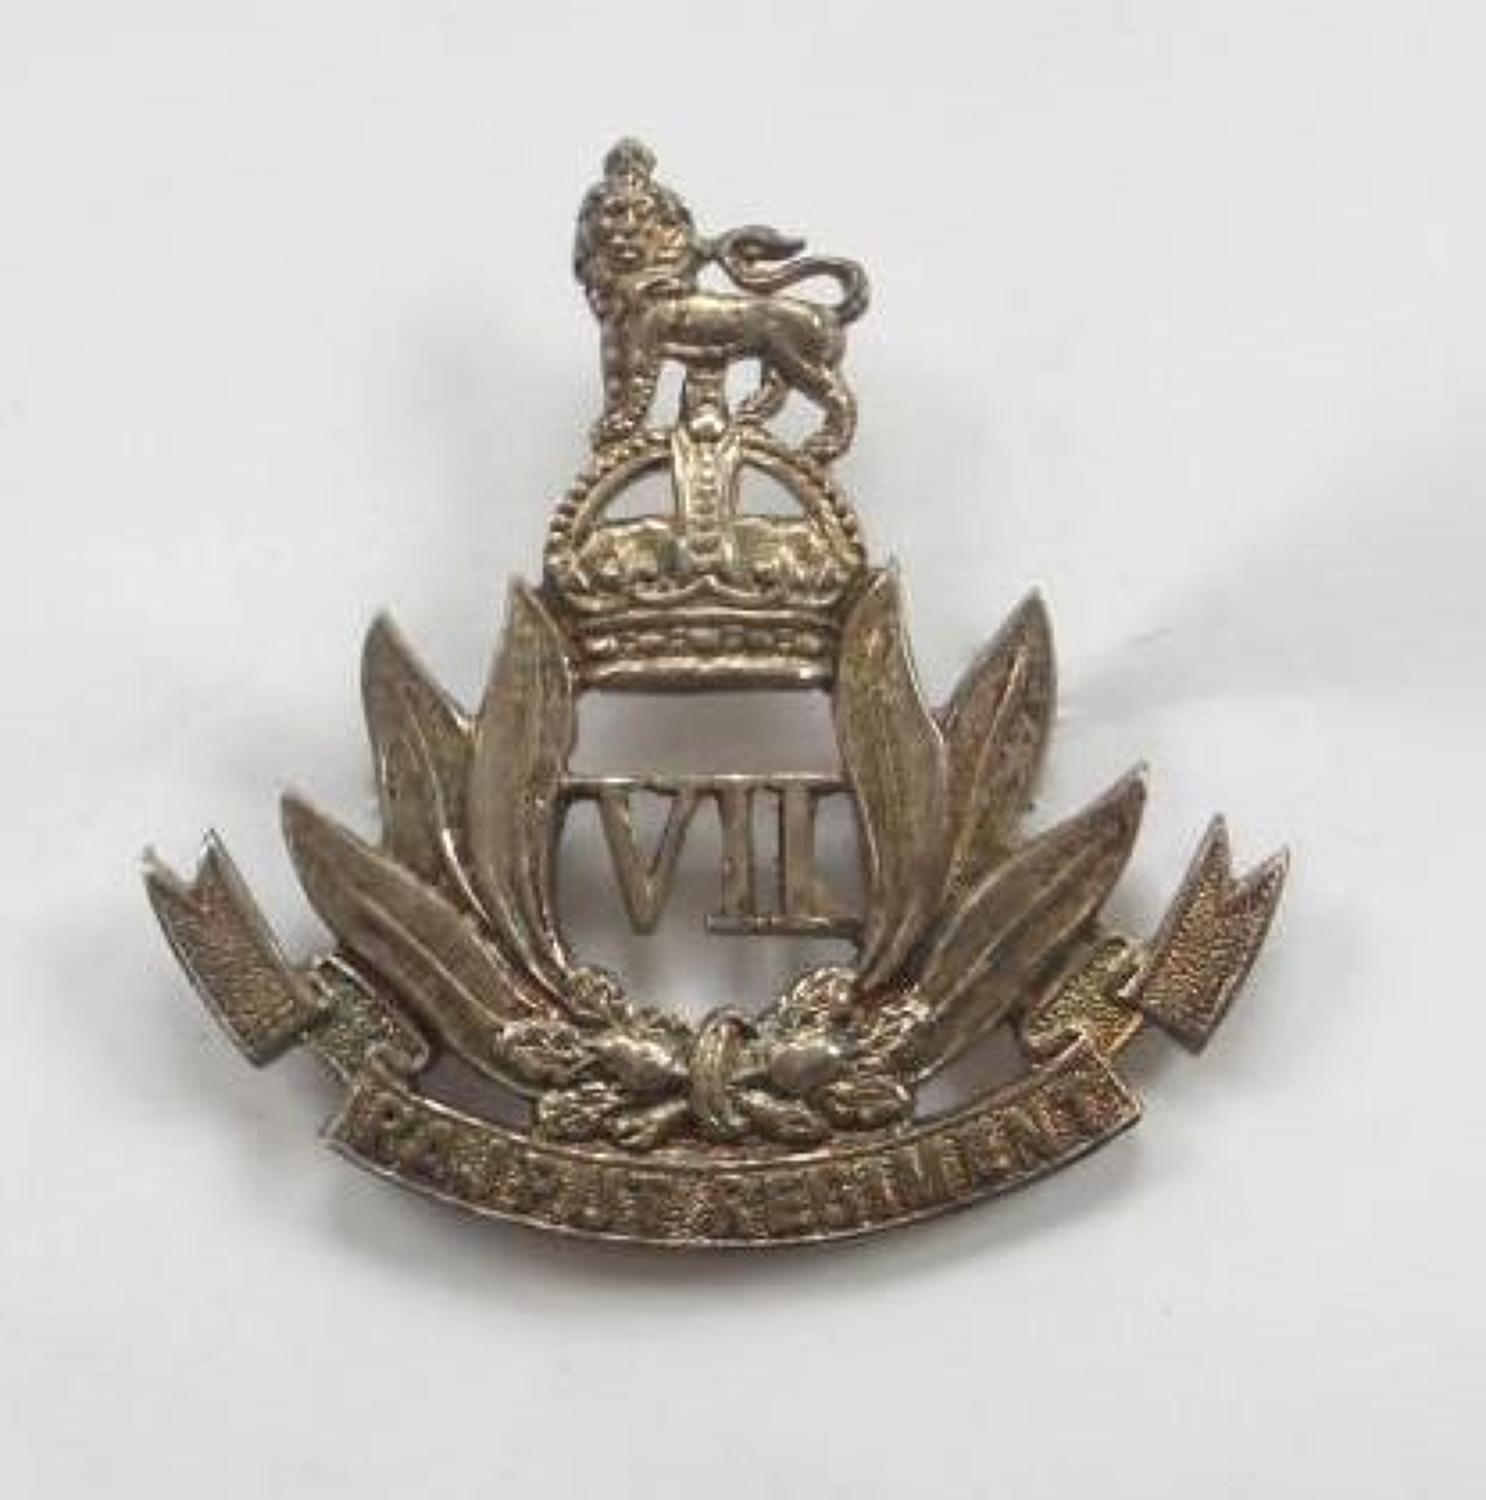 Indian. 7th Rajput Regiment Officer's cap badge by Firmin, London